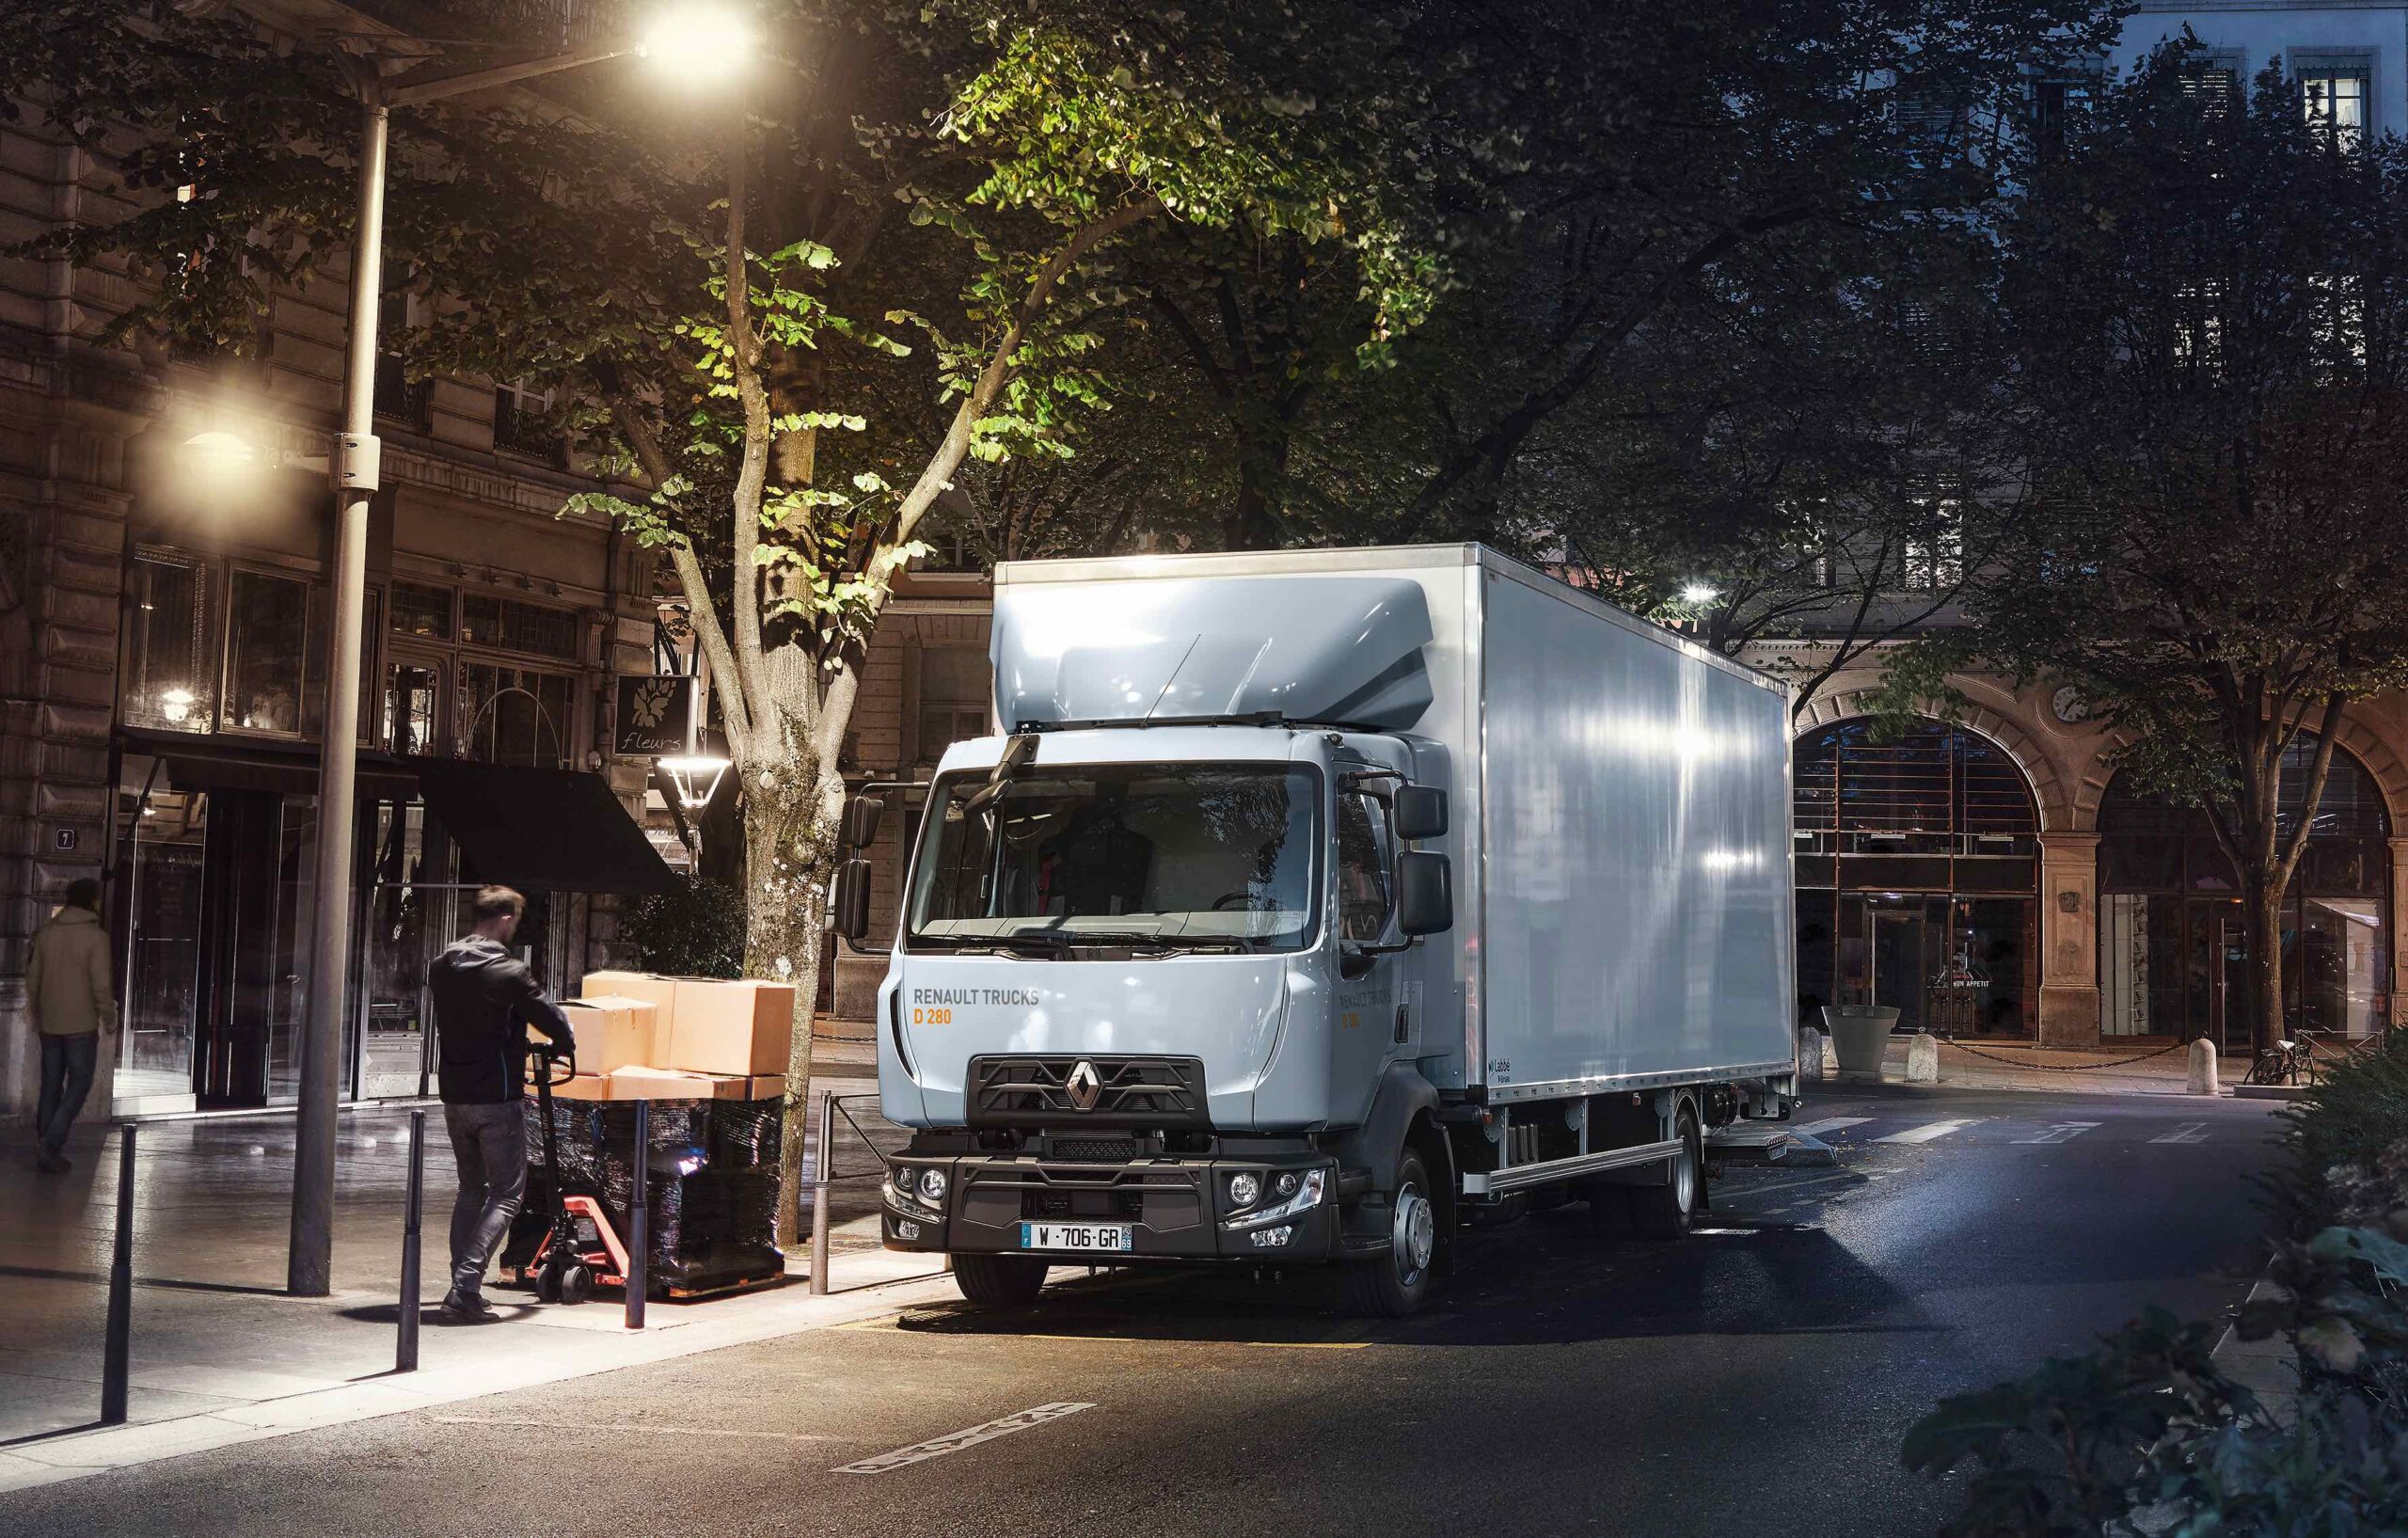 pub renault trucks camions car photoshoot